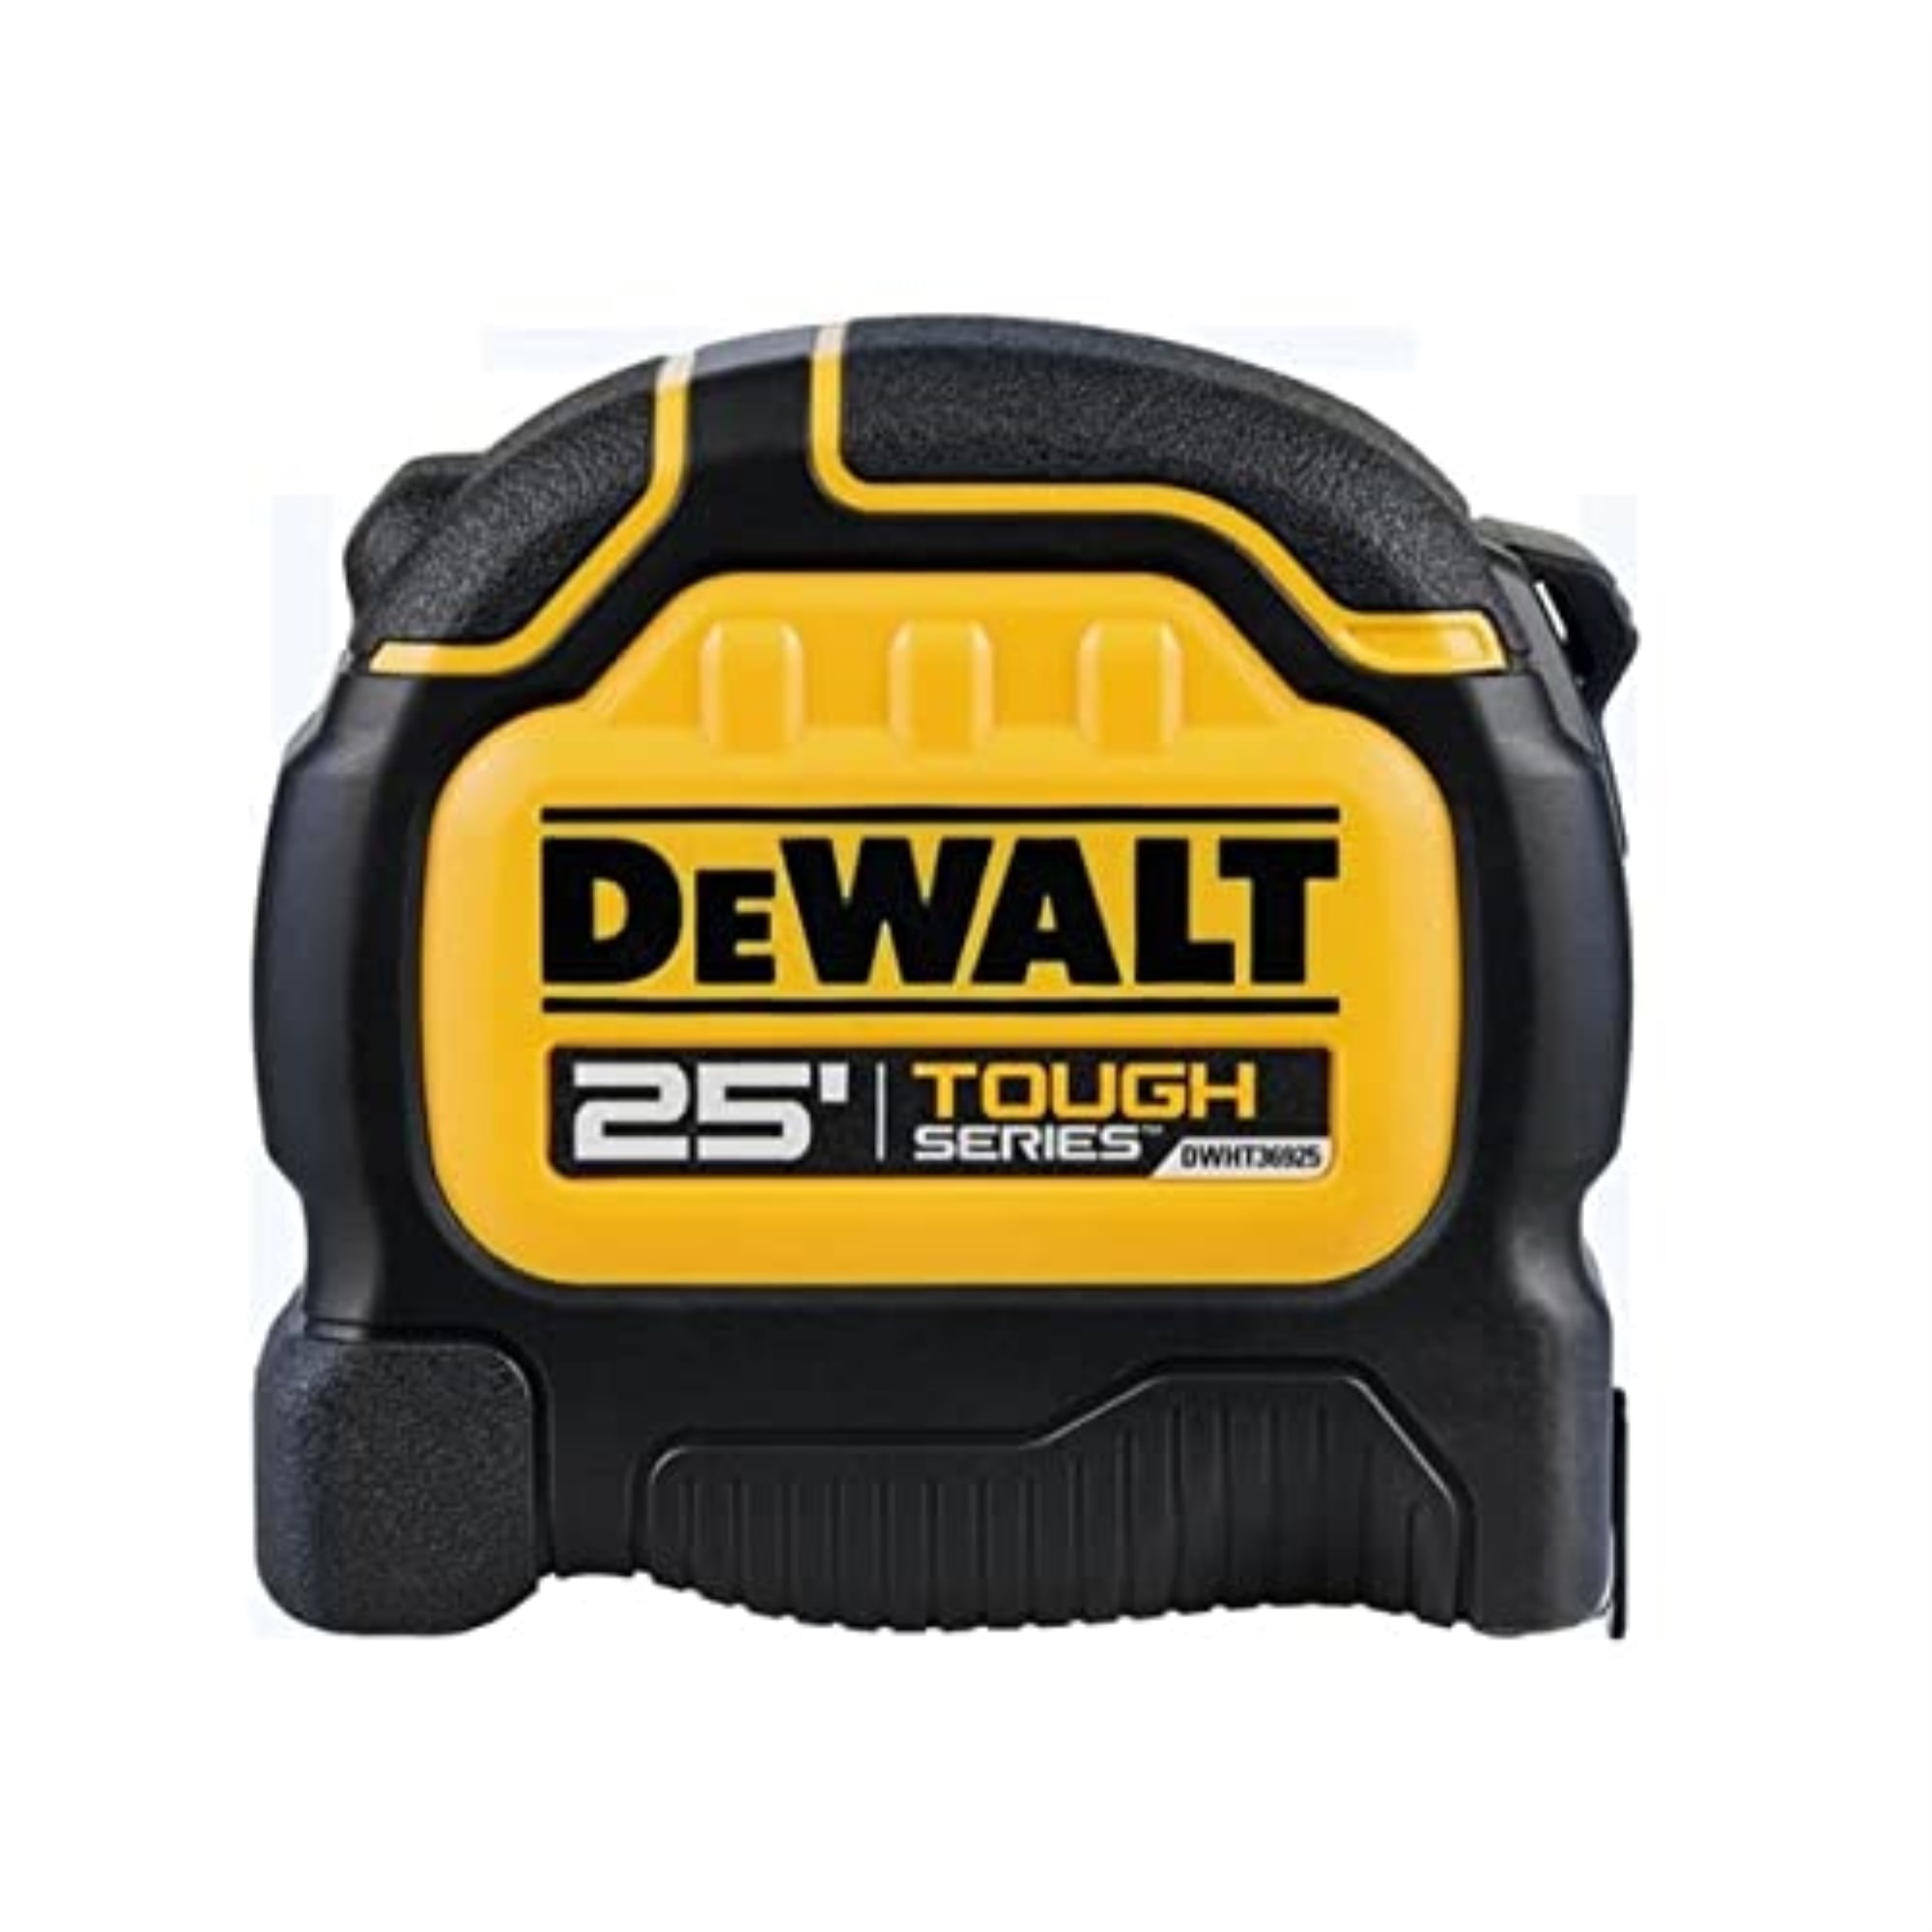 DEWALT DWHT36109 Tape Measure 30 FT for sale online 